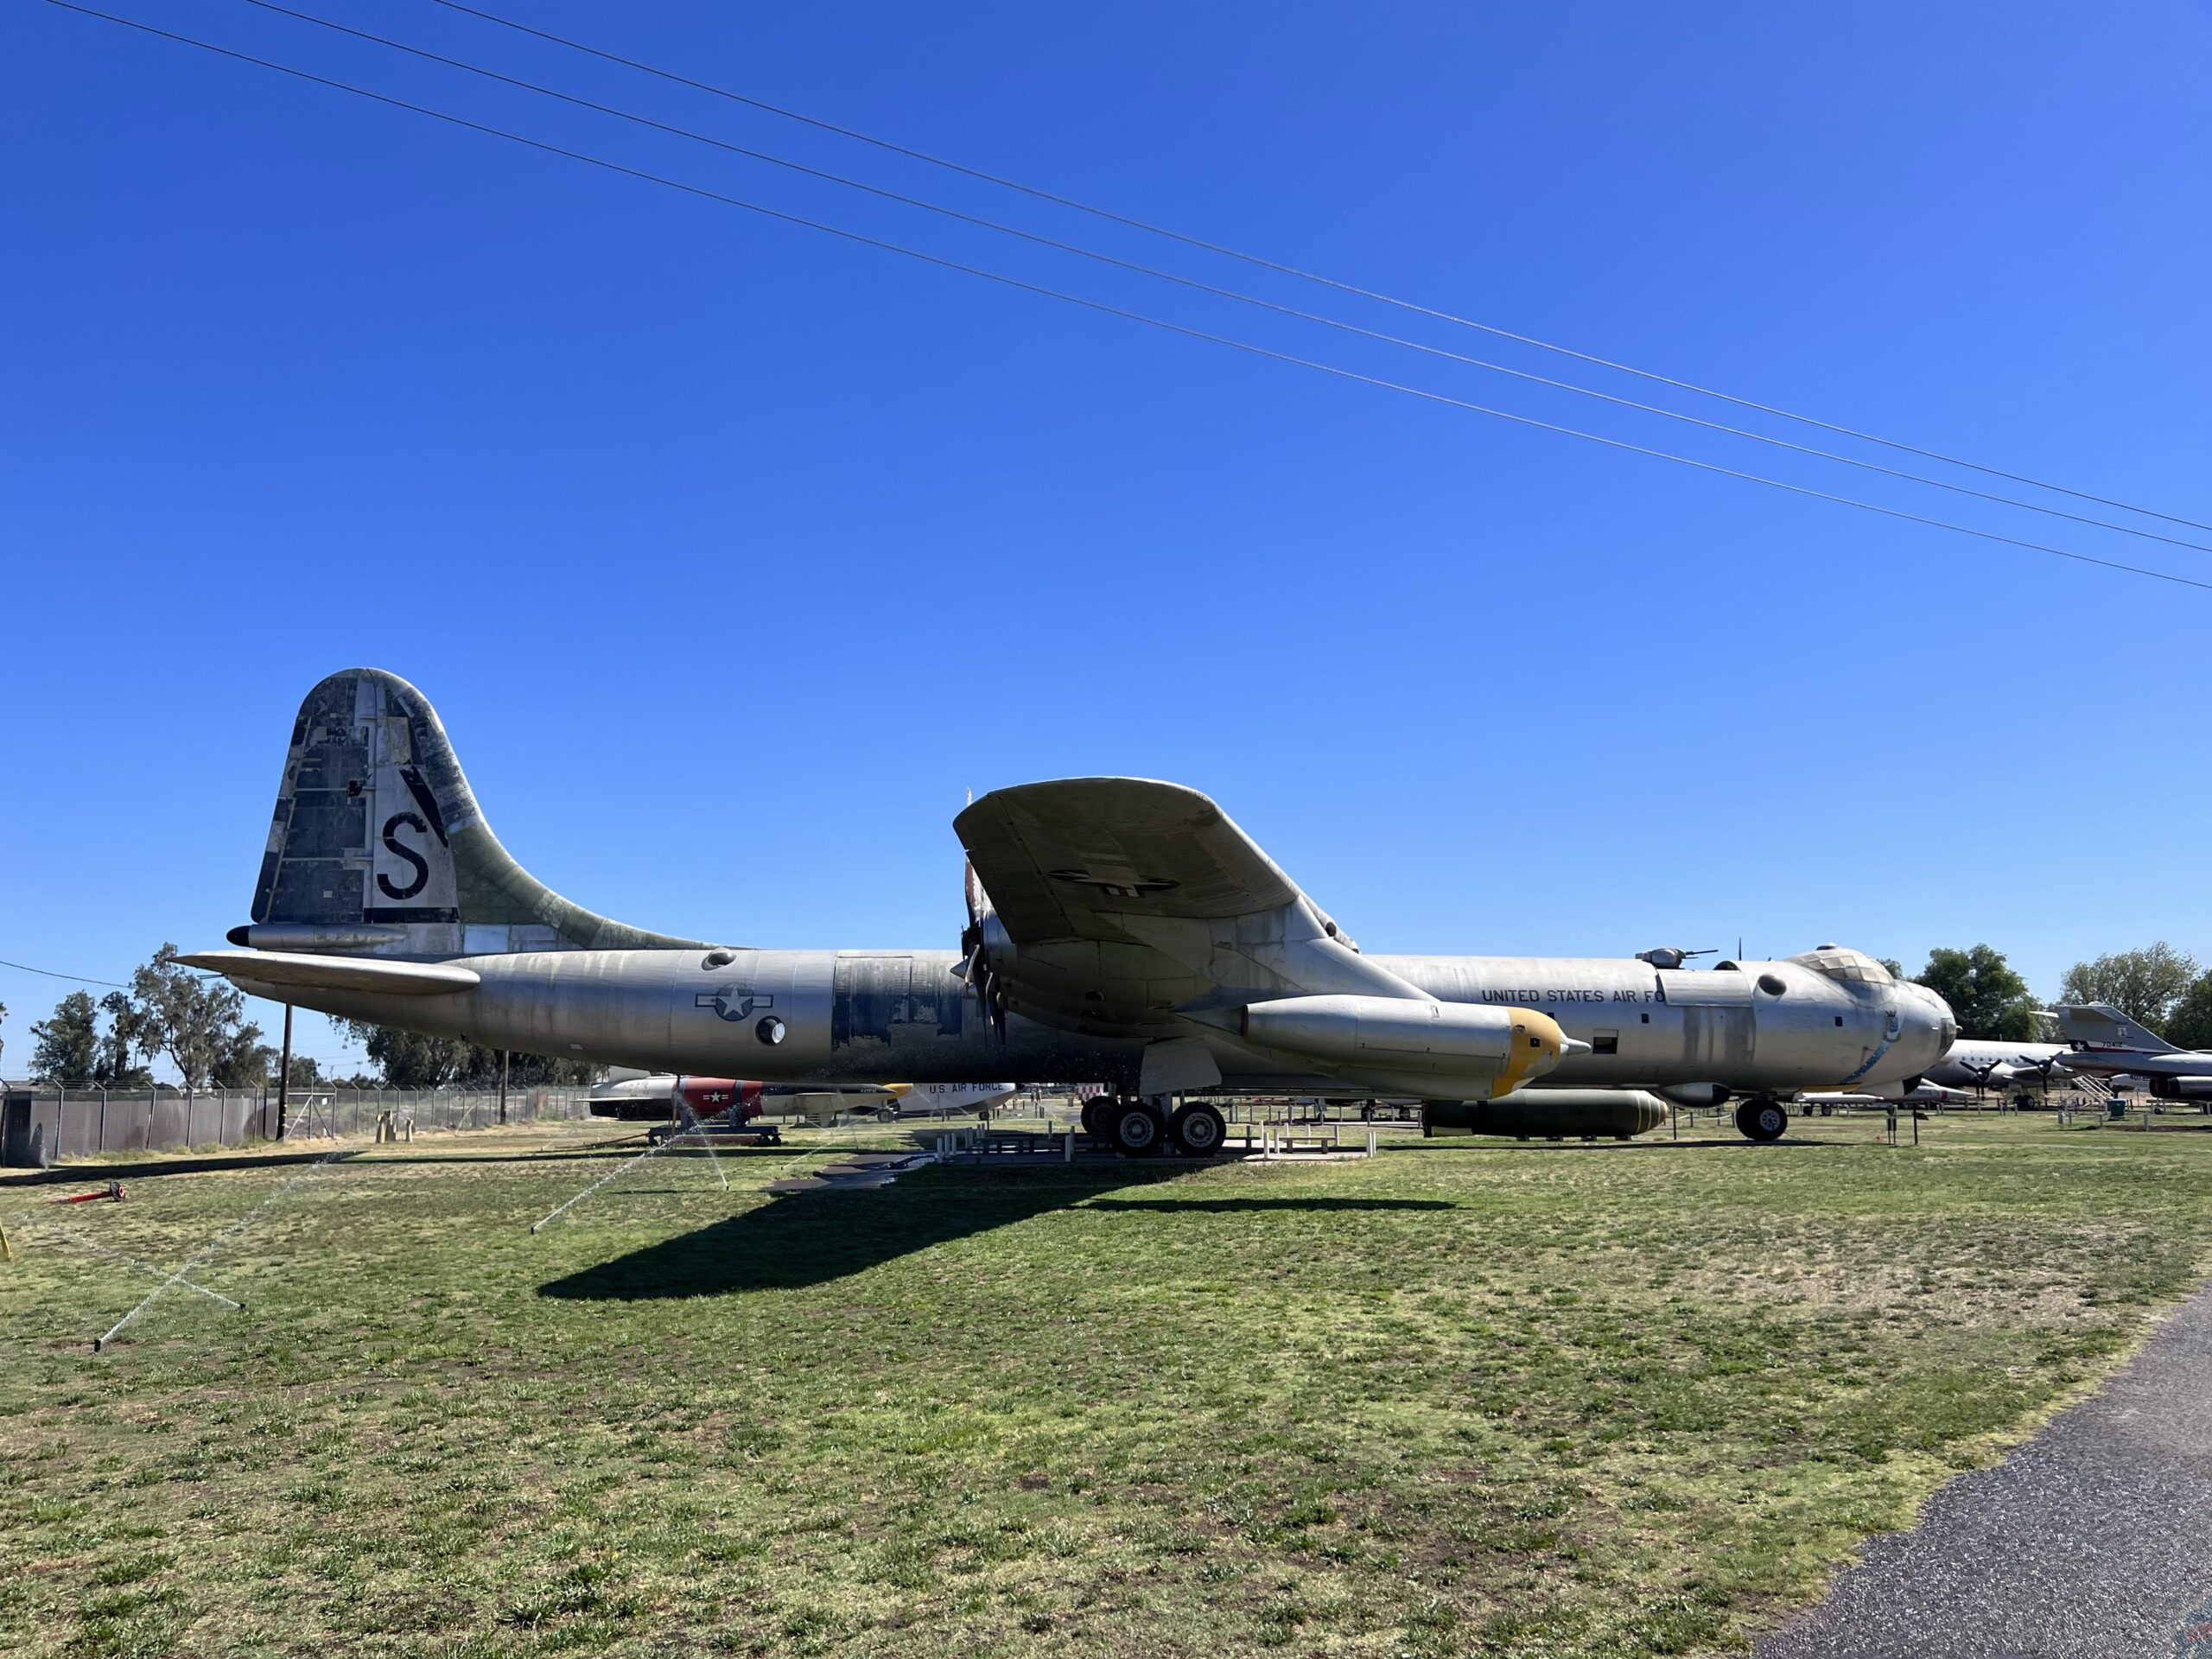 https://vintageaviationnews.com/wp-content/uploads/Castle-Air-Museums-Convair-RB-36H-30-CF-Peacemaker-USAF-serial-51-13730-scaled.jpg